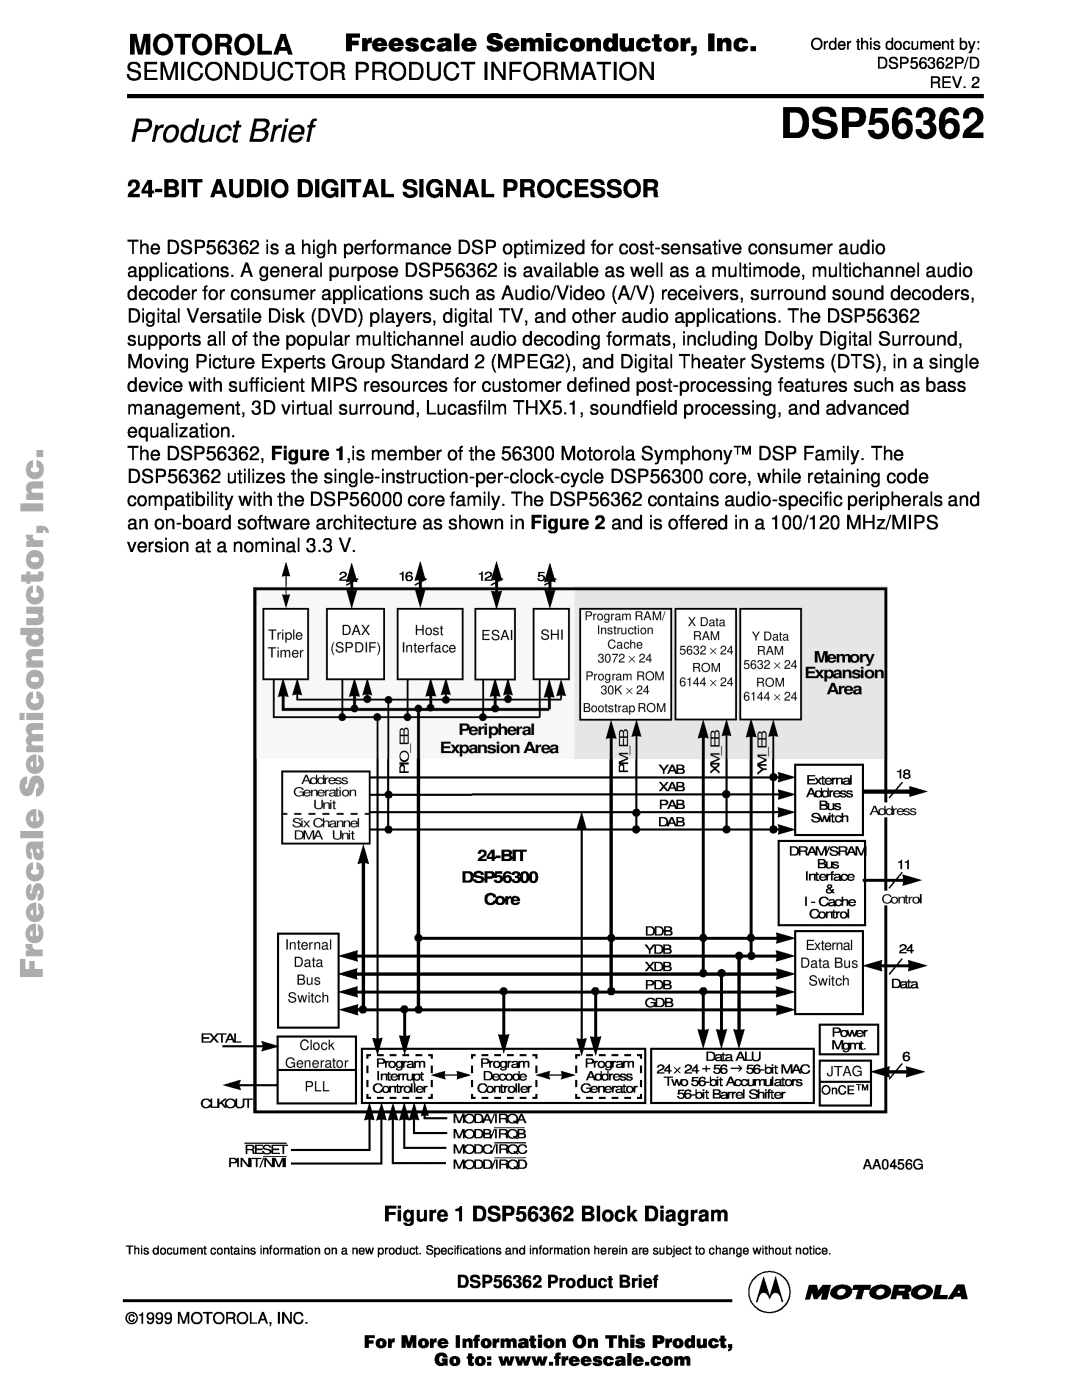 Motorola DSP56362 specifications MOTOROLA Freescale Semiconductor, Inc, Bit Audio Digital Signal Processor 